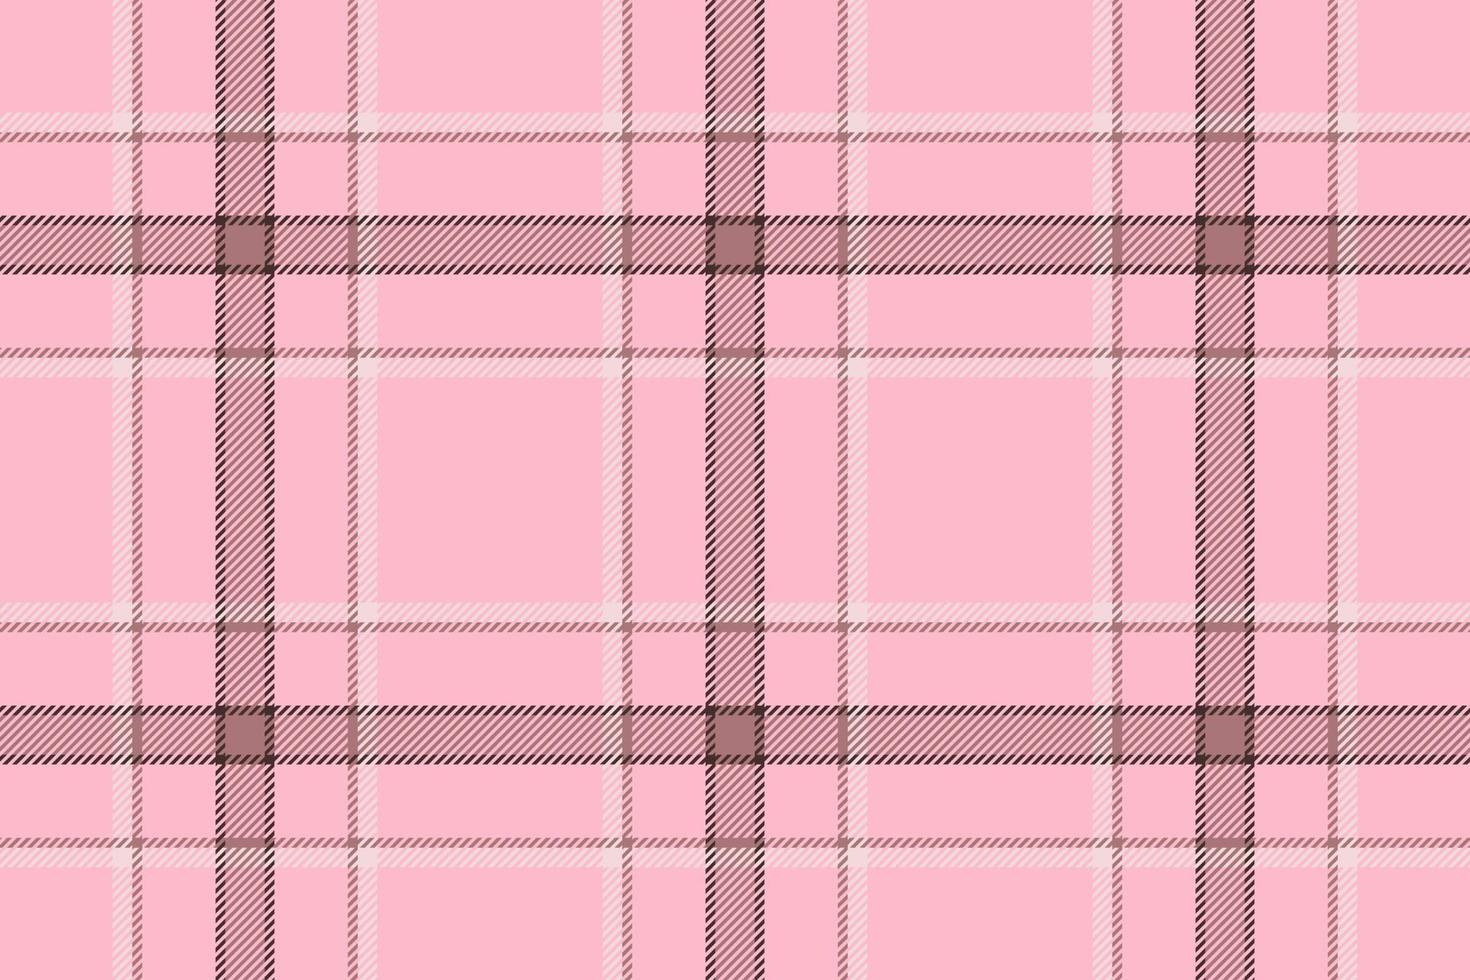 padrão xadrez xadrez em rosa. textura de tecido sem costura. estampa têxtil  tartan. 14664310 Vetor no Vecteezy